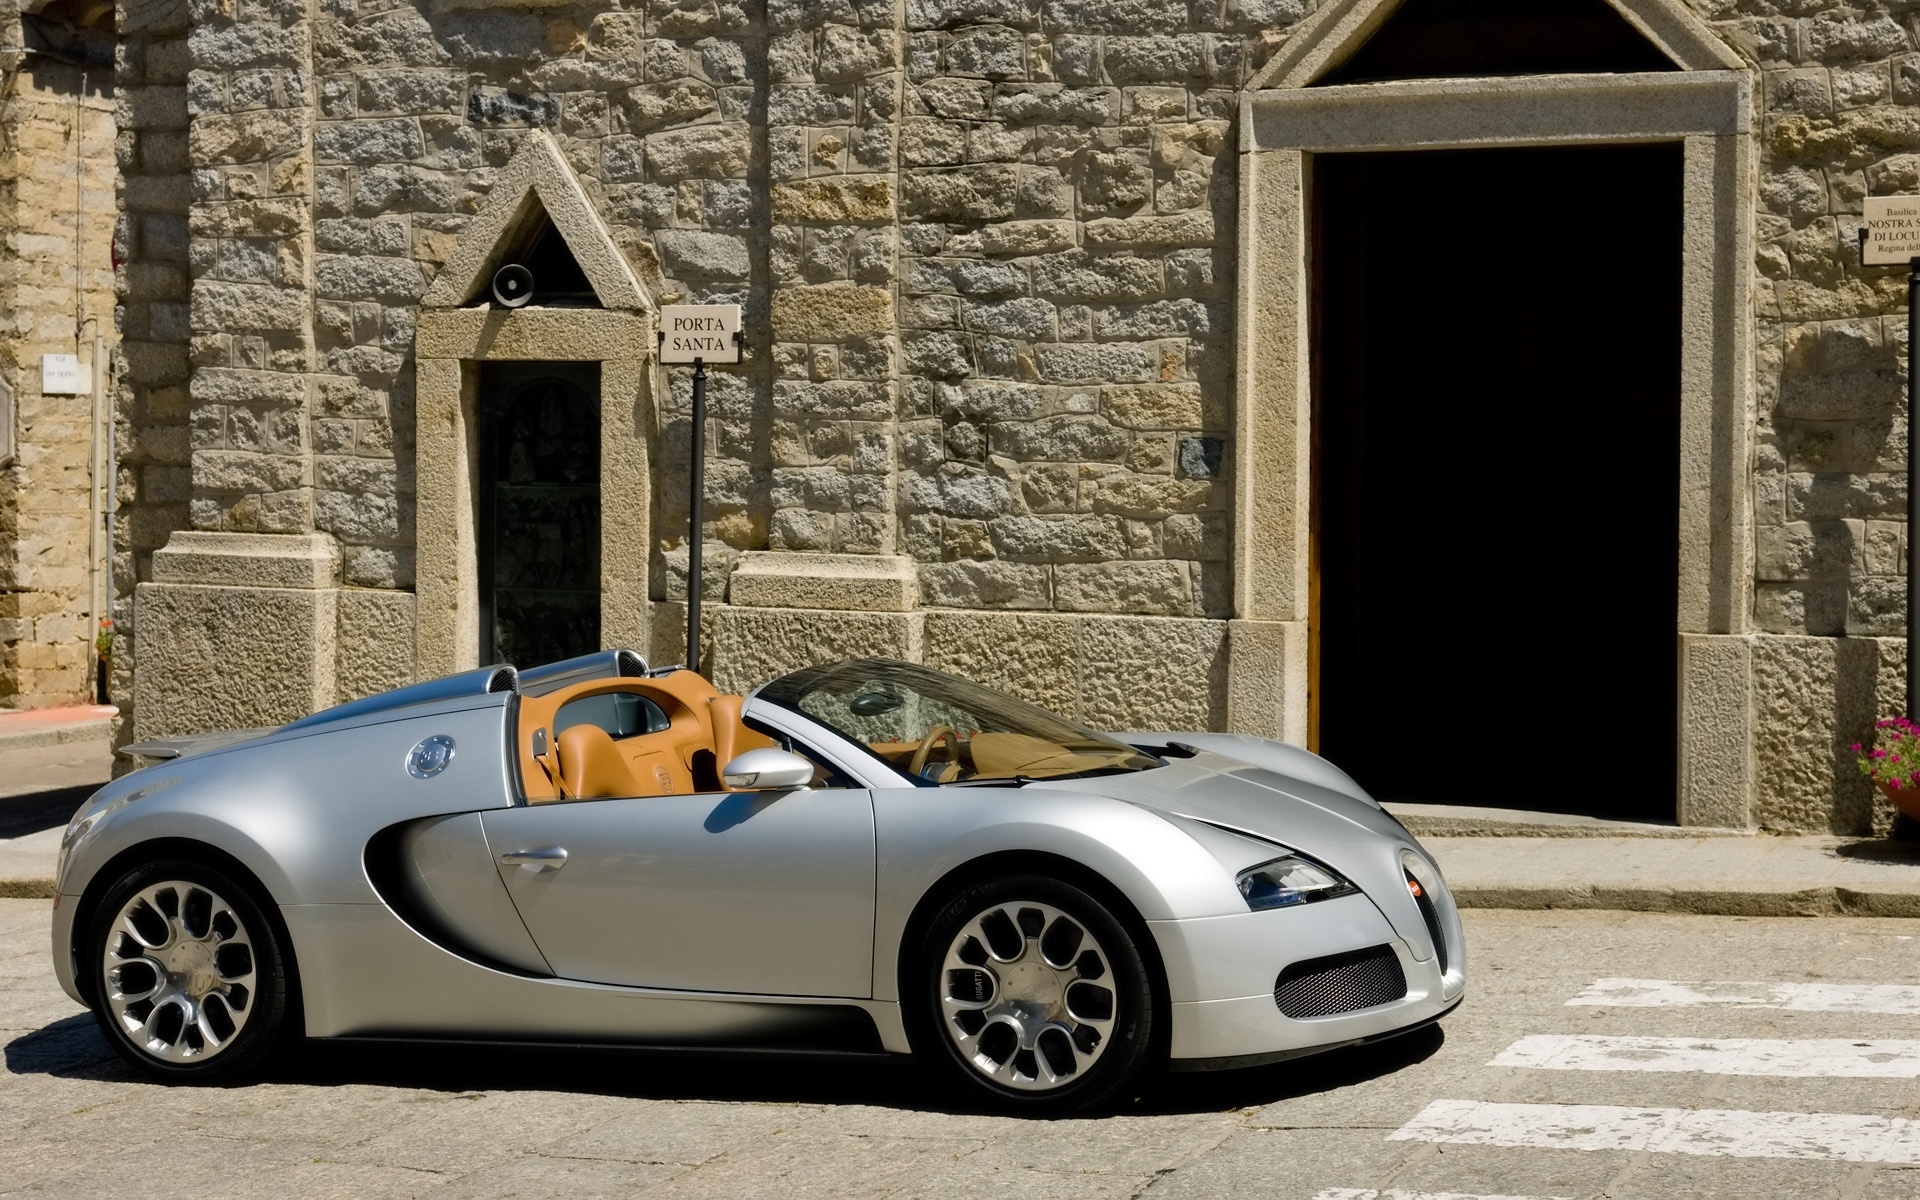 Bugatti Veyron 16.4 Grand Sport 2010 in Sardinia - Side 3 for 1920 x 1200 widescreen resolution